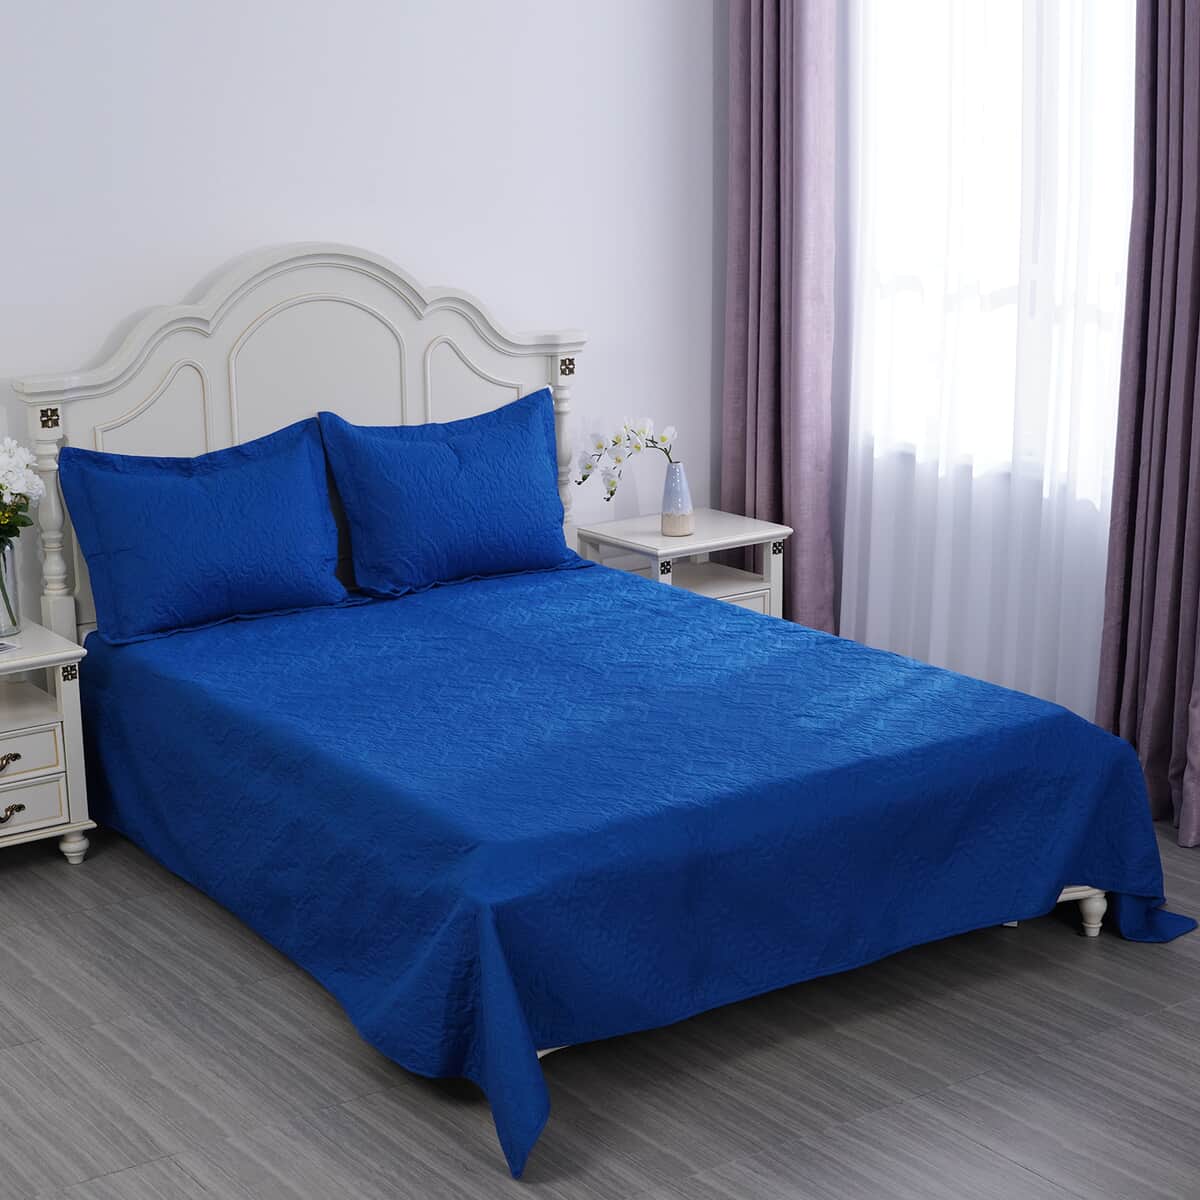 Homesmart 3 Pcs Solid Blue Pinsonic Quilt Bedding Set - King Size image number 0